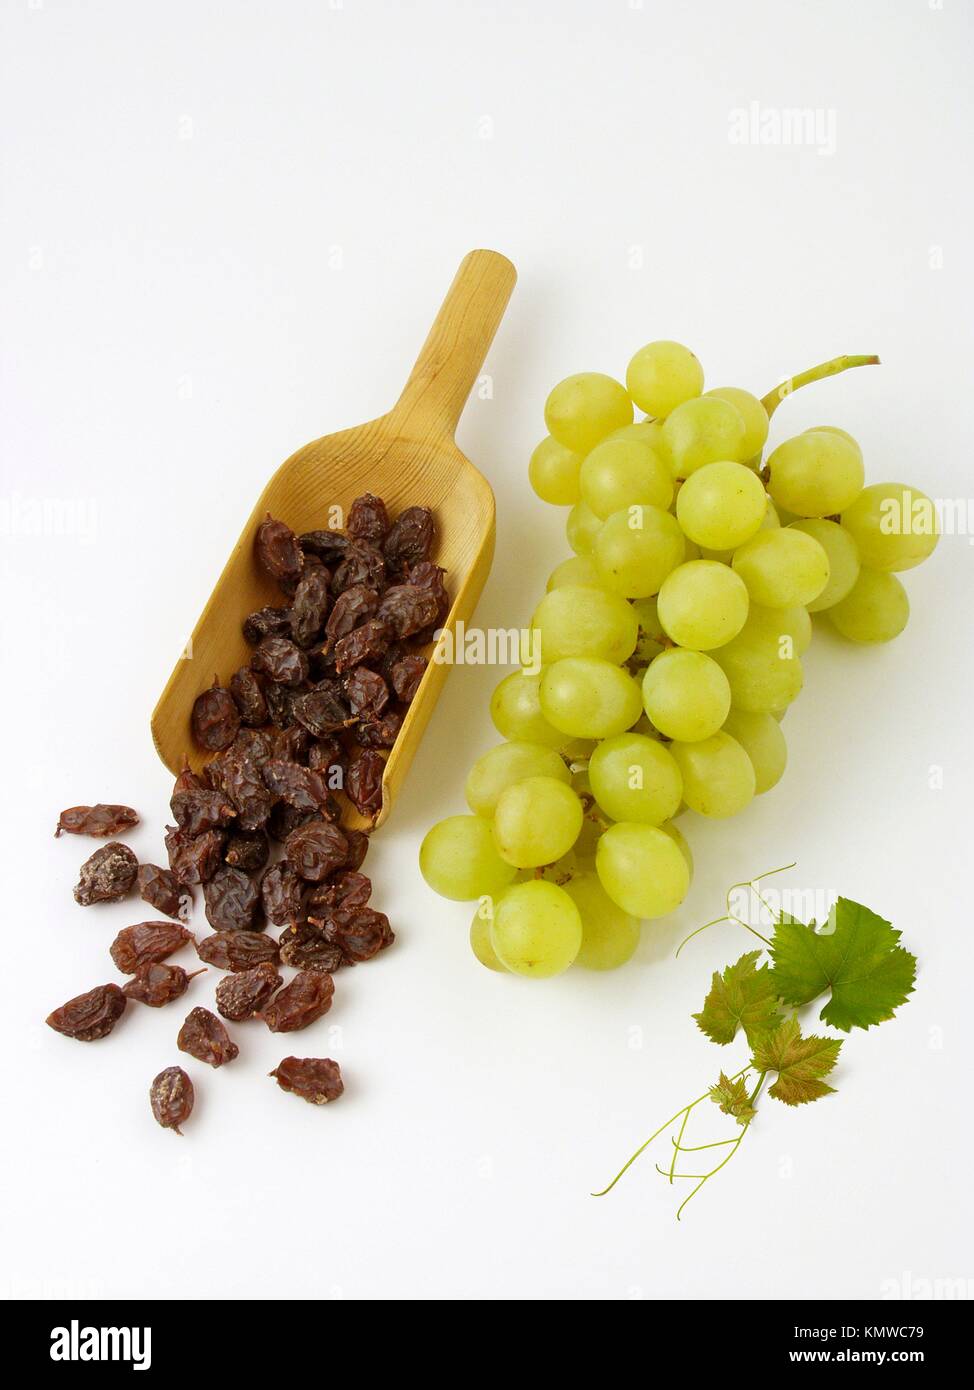 Grapes and raisins Stock Photo - Alamy